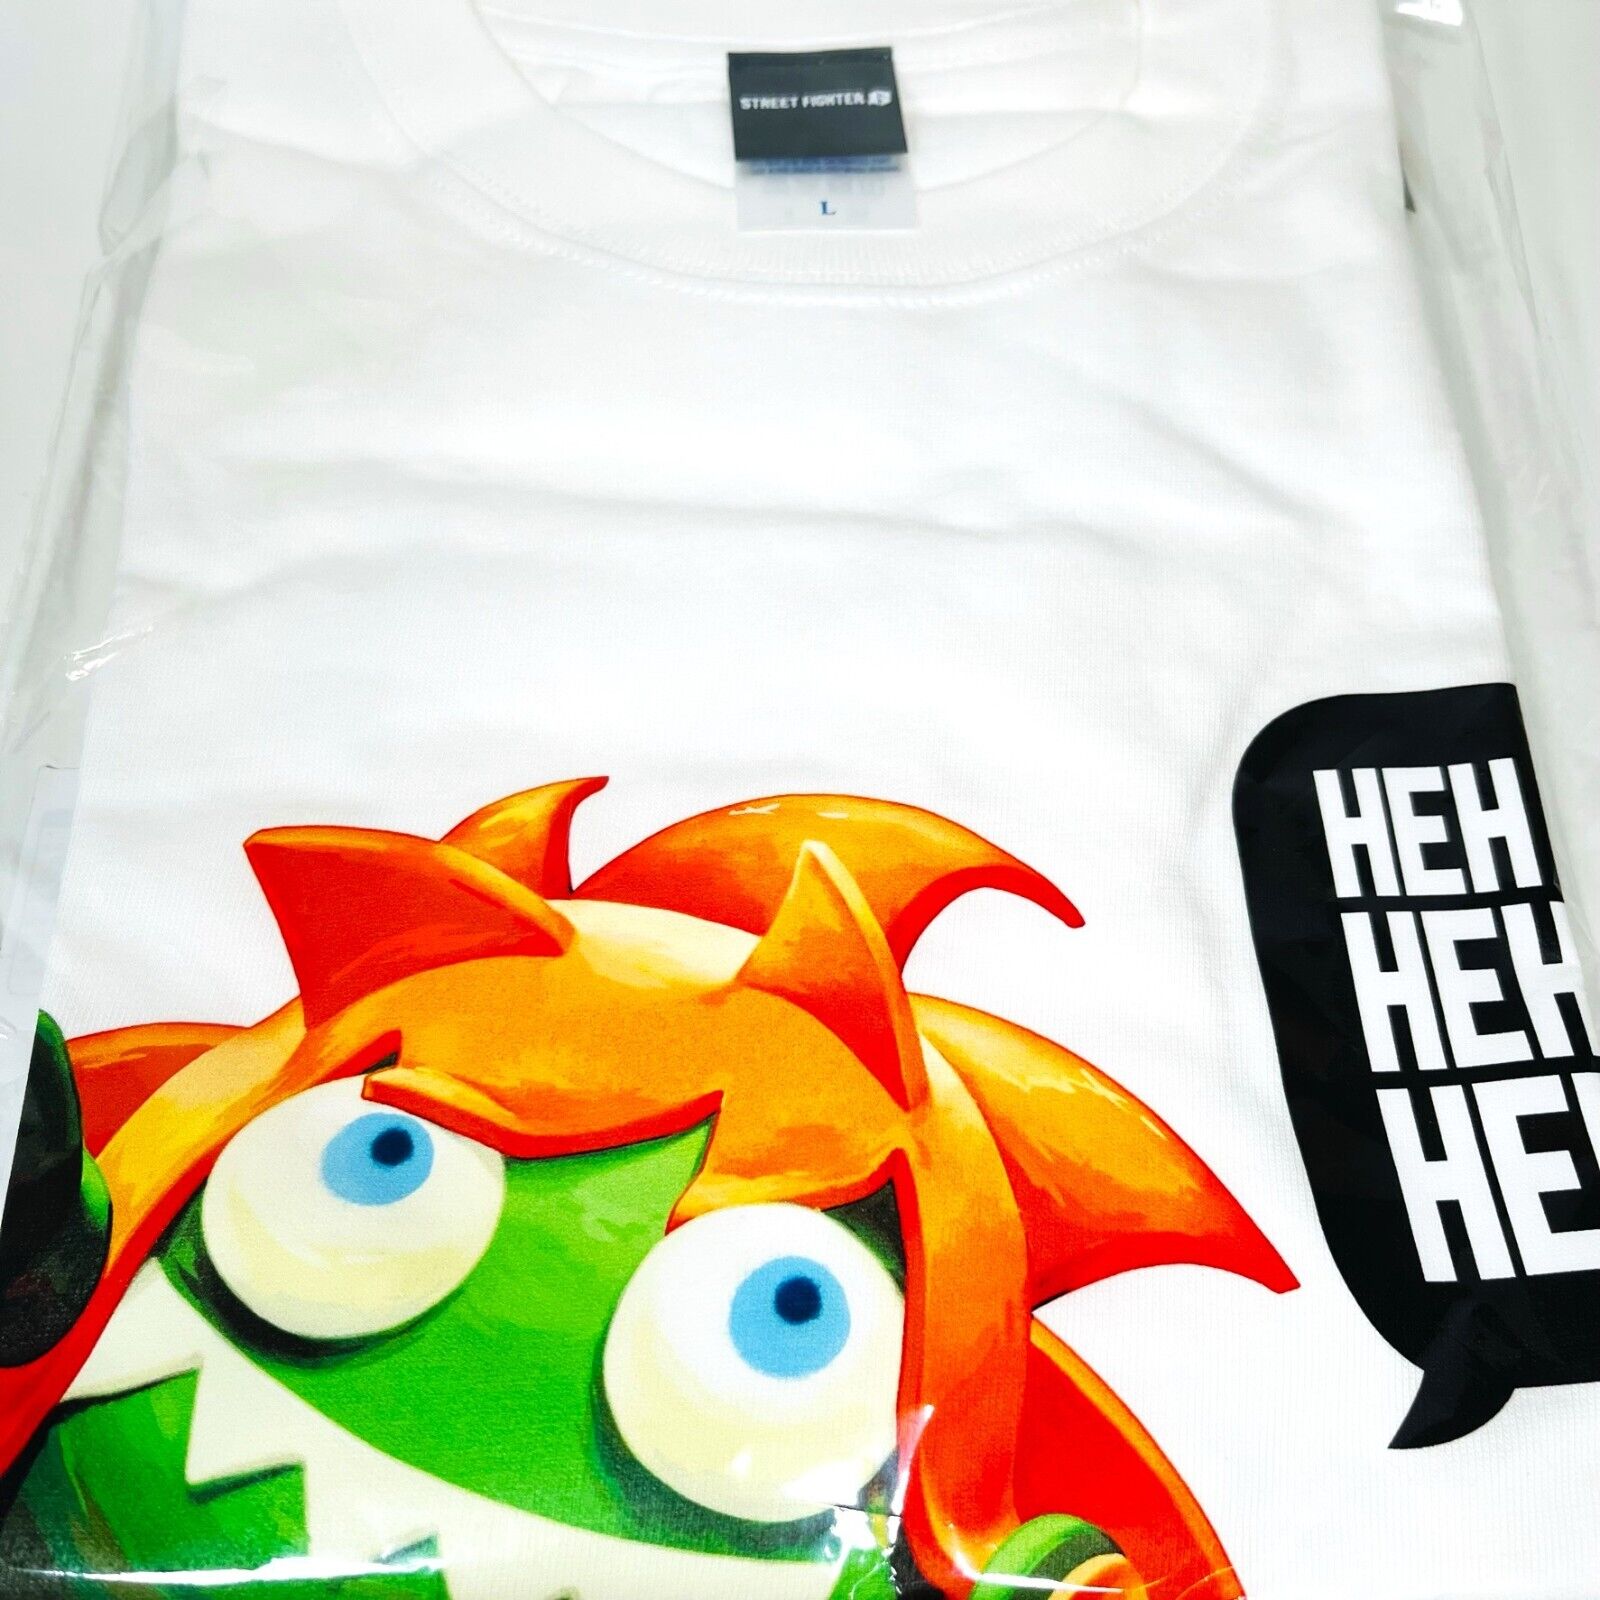 Blanka Street Fighter 6 Shirt size L: Capcom Store Japan Exclusive T-Shirt *NEW*